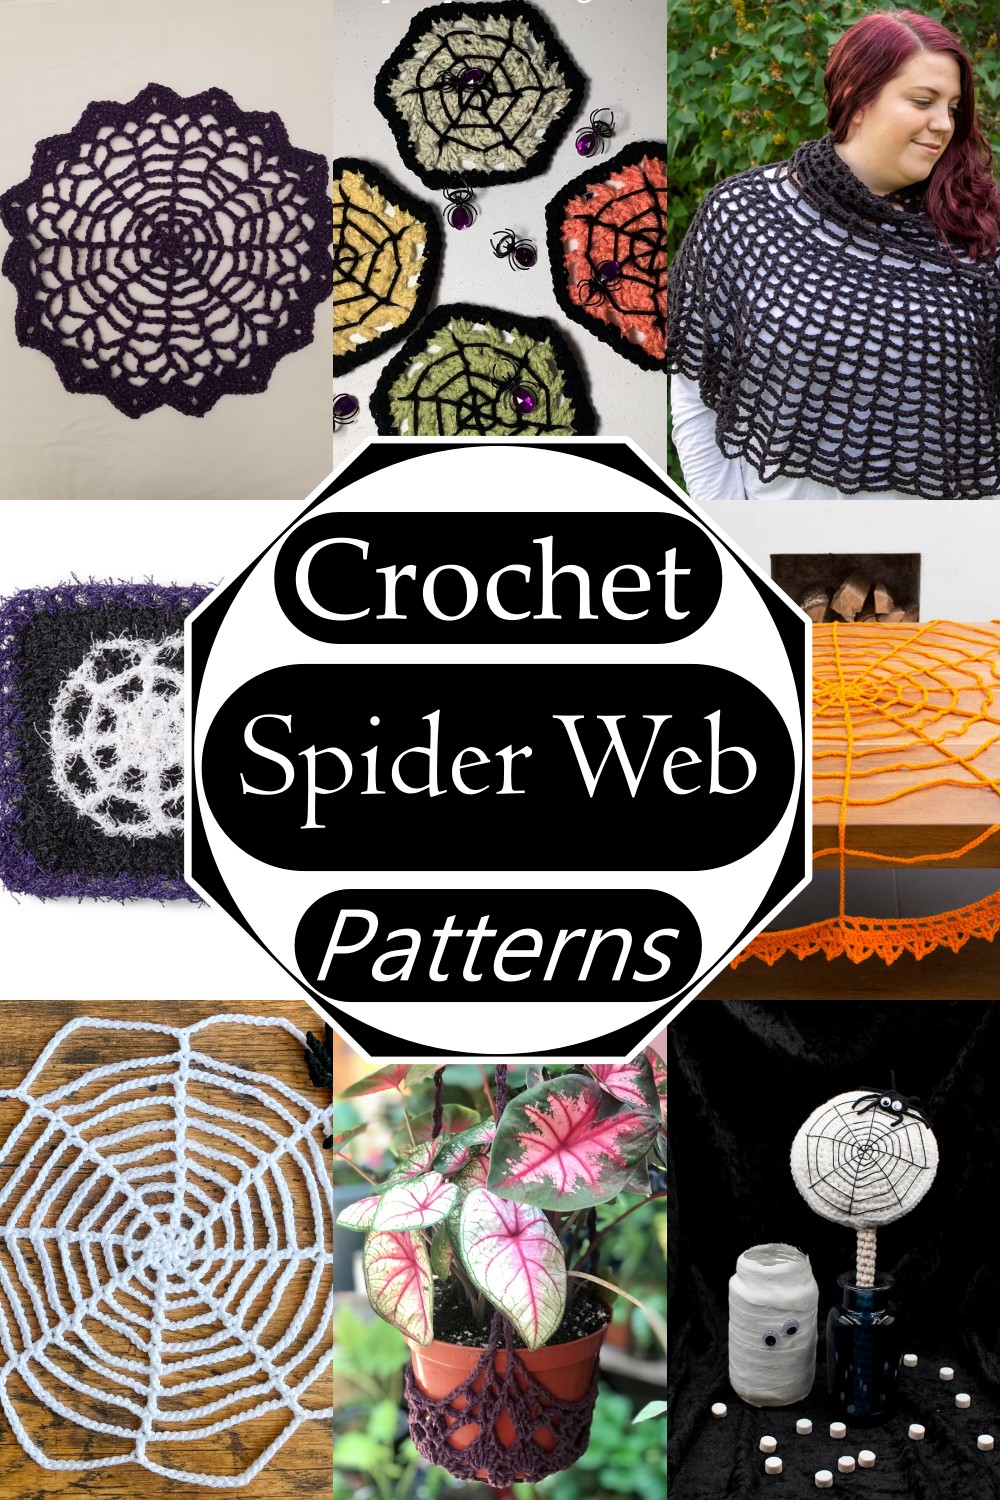 Free Crochet Spider Web Patterns